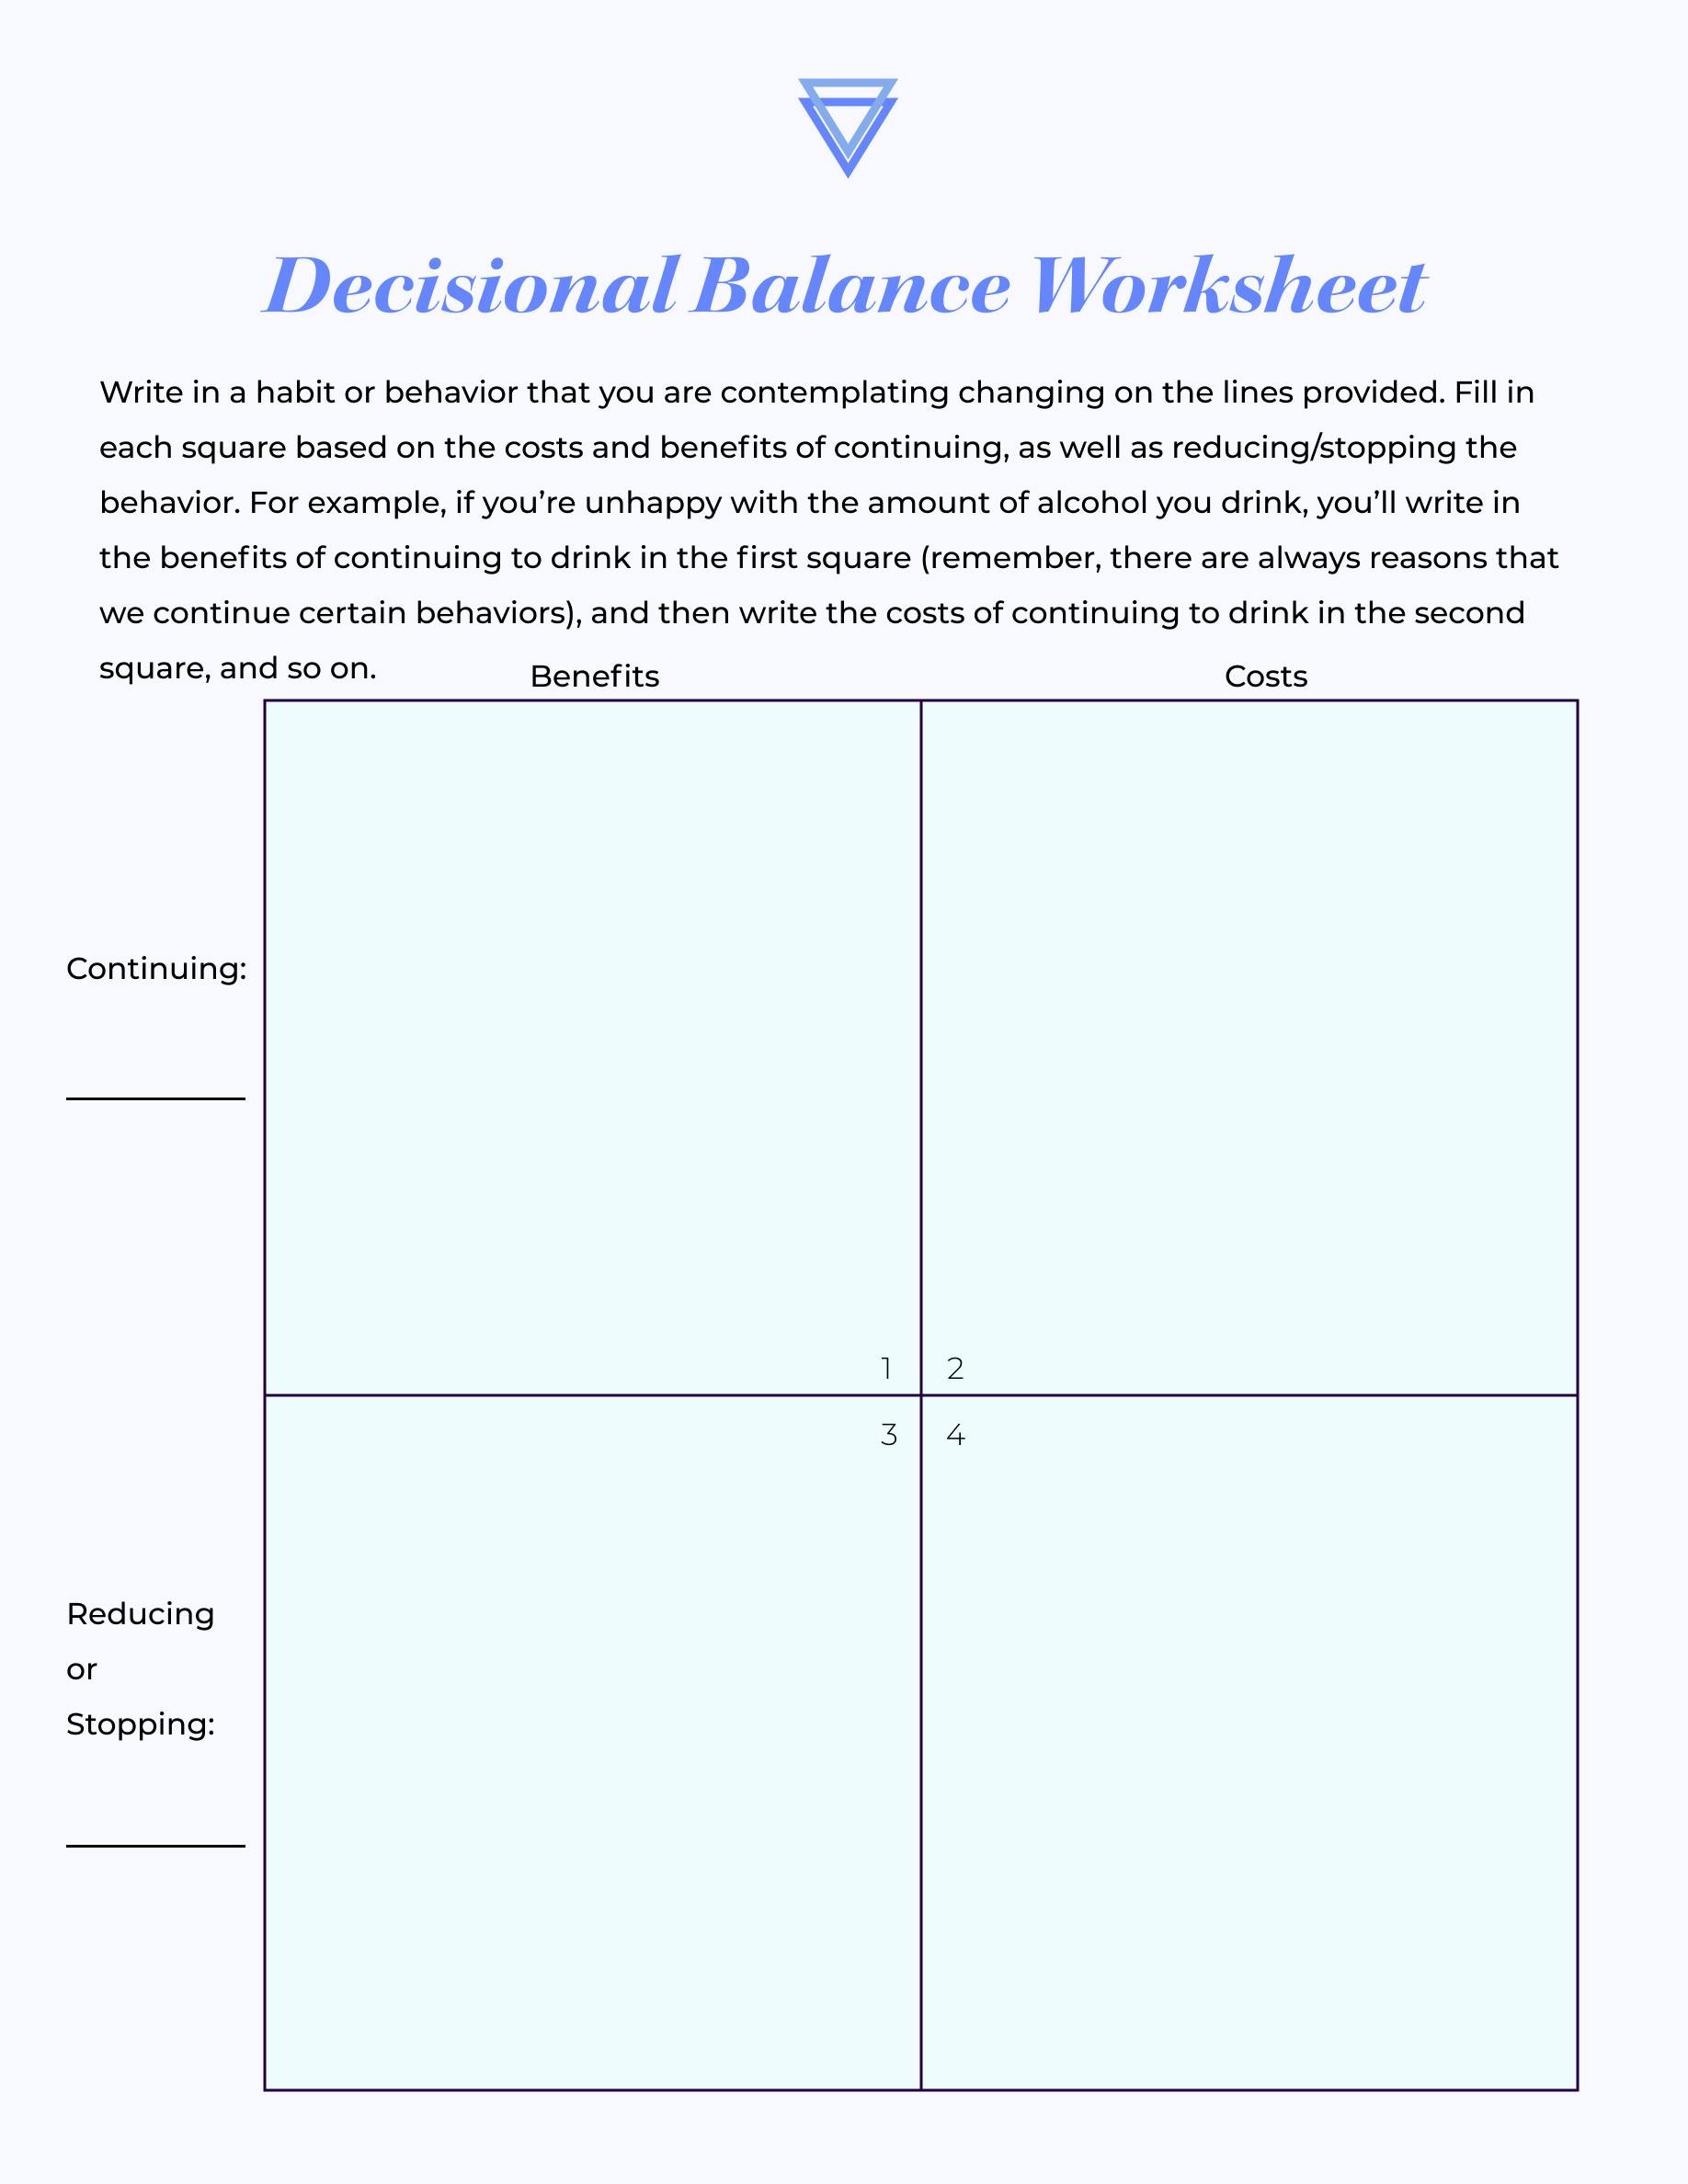 decisional-balance-worksheet-expert-help-for-your-emotional-health